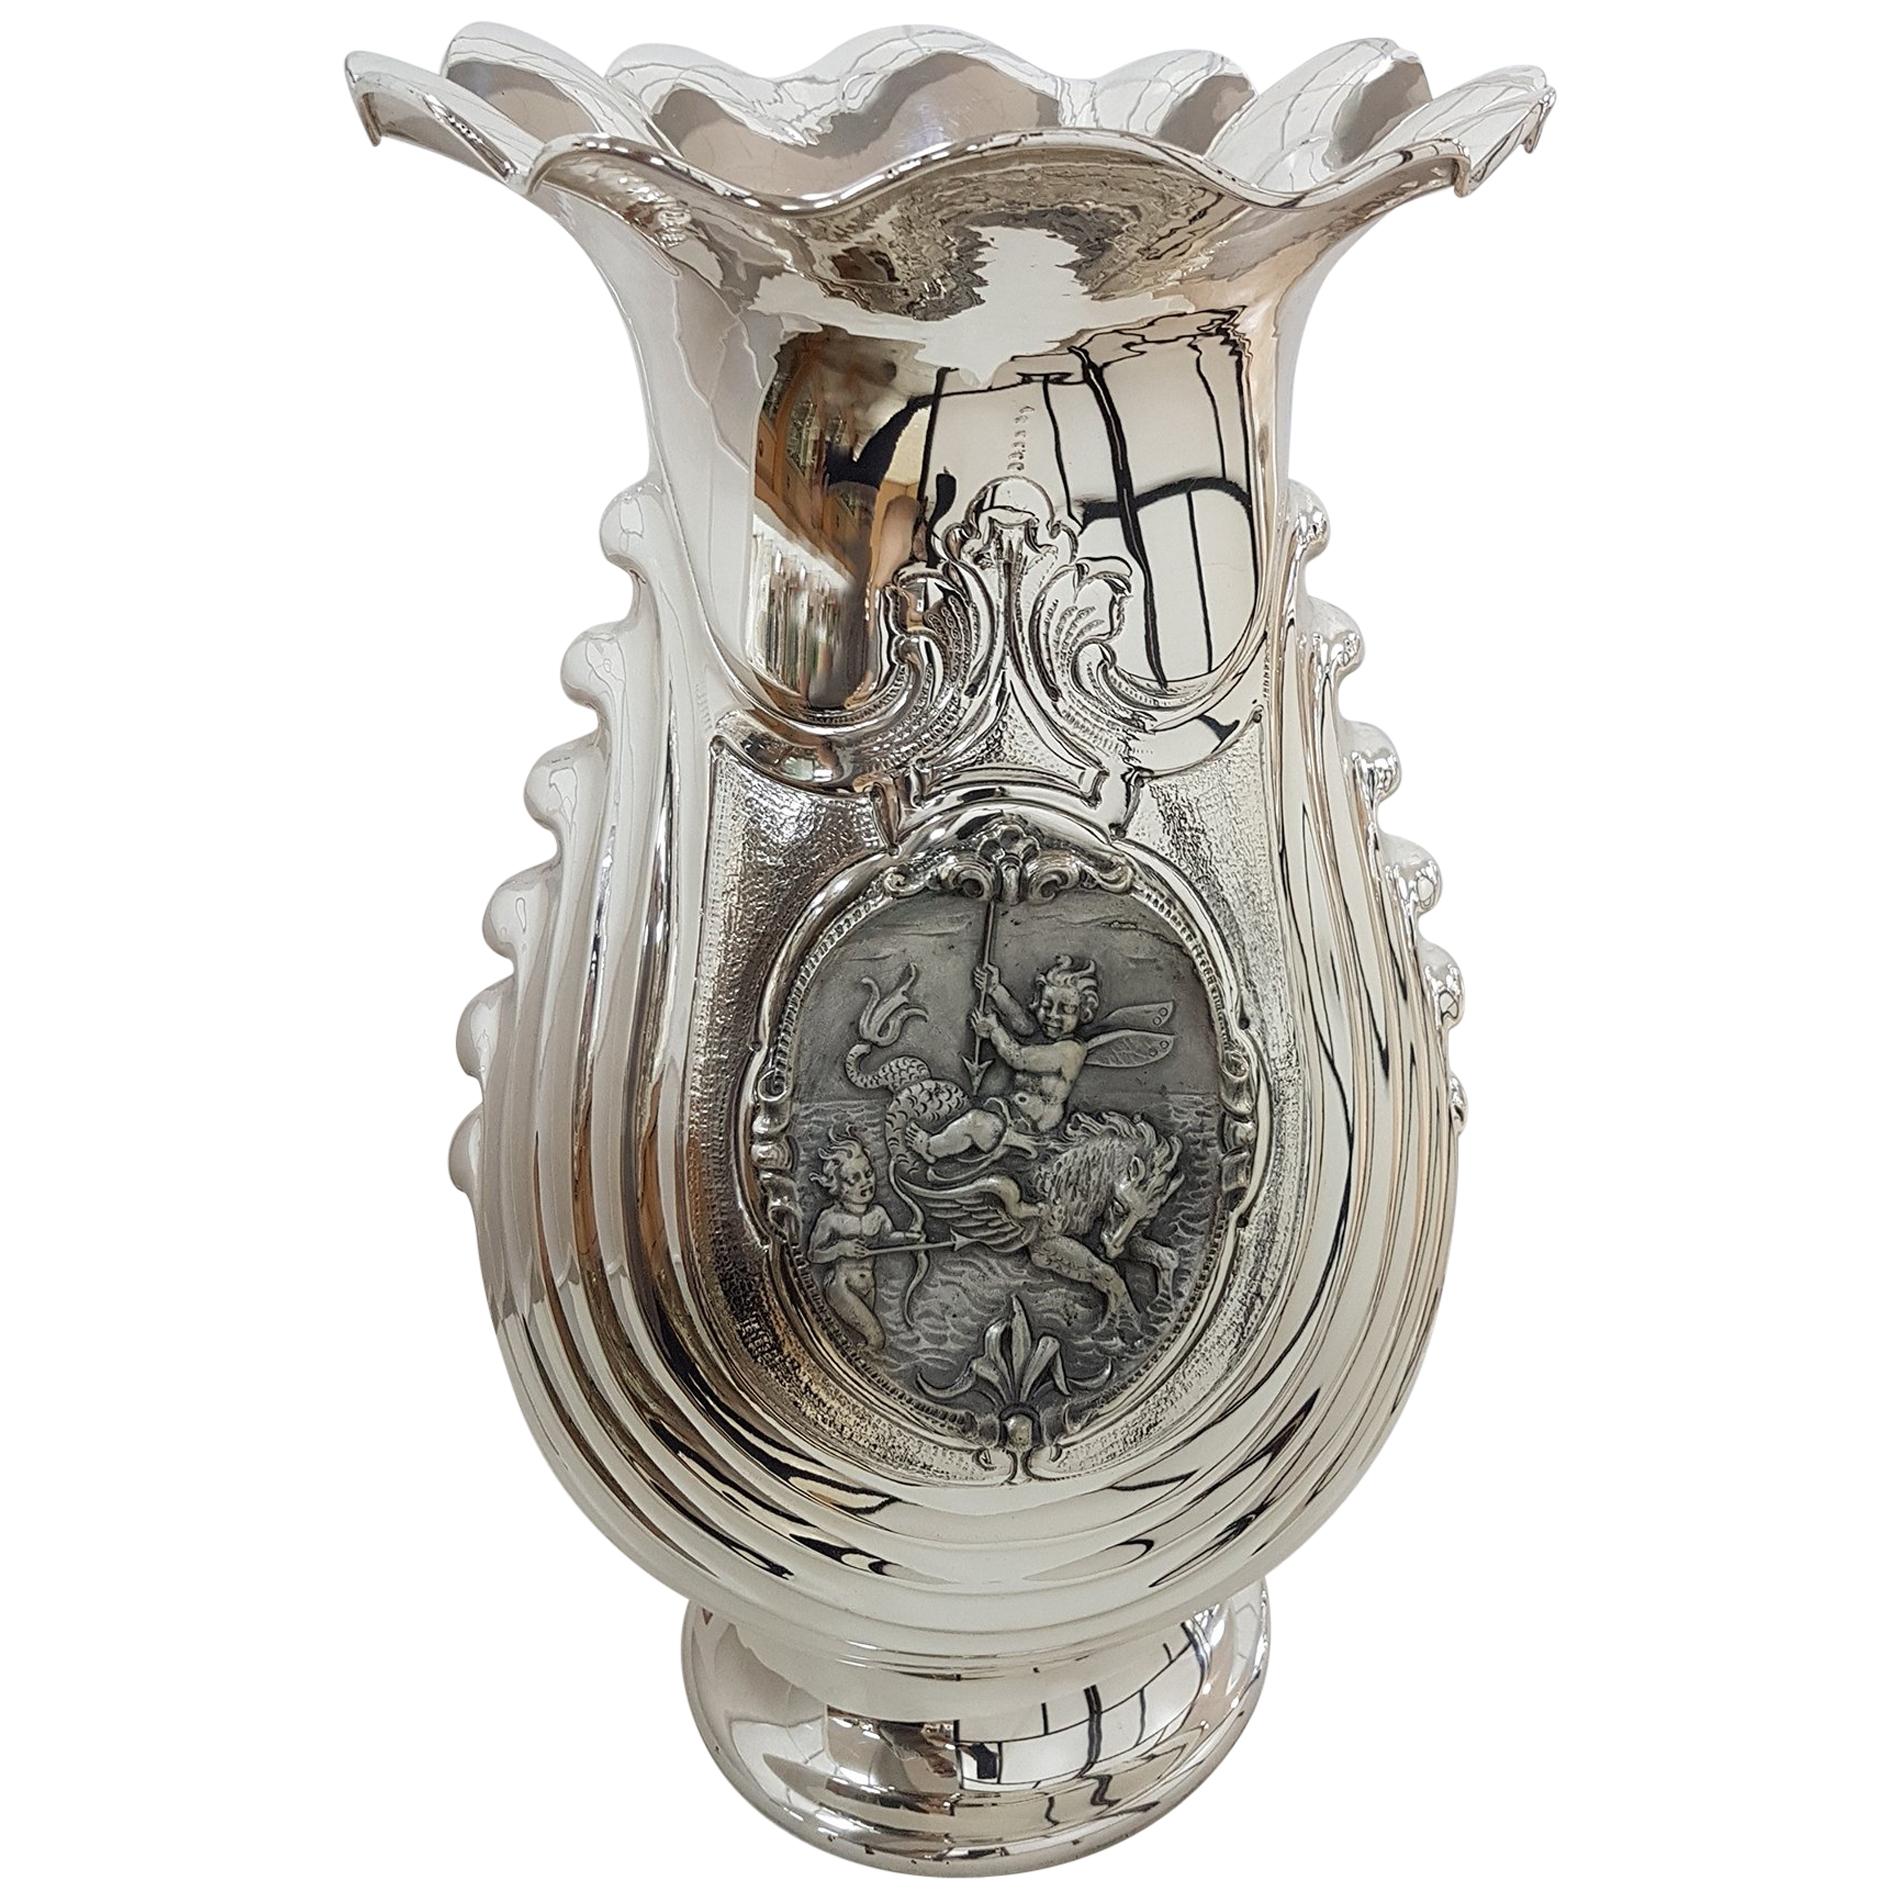 20th Italian Century Solid Silver Big Vase Blason Depicting Mythological Figures